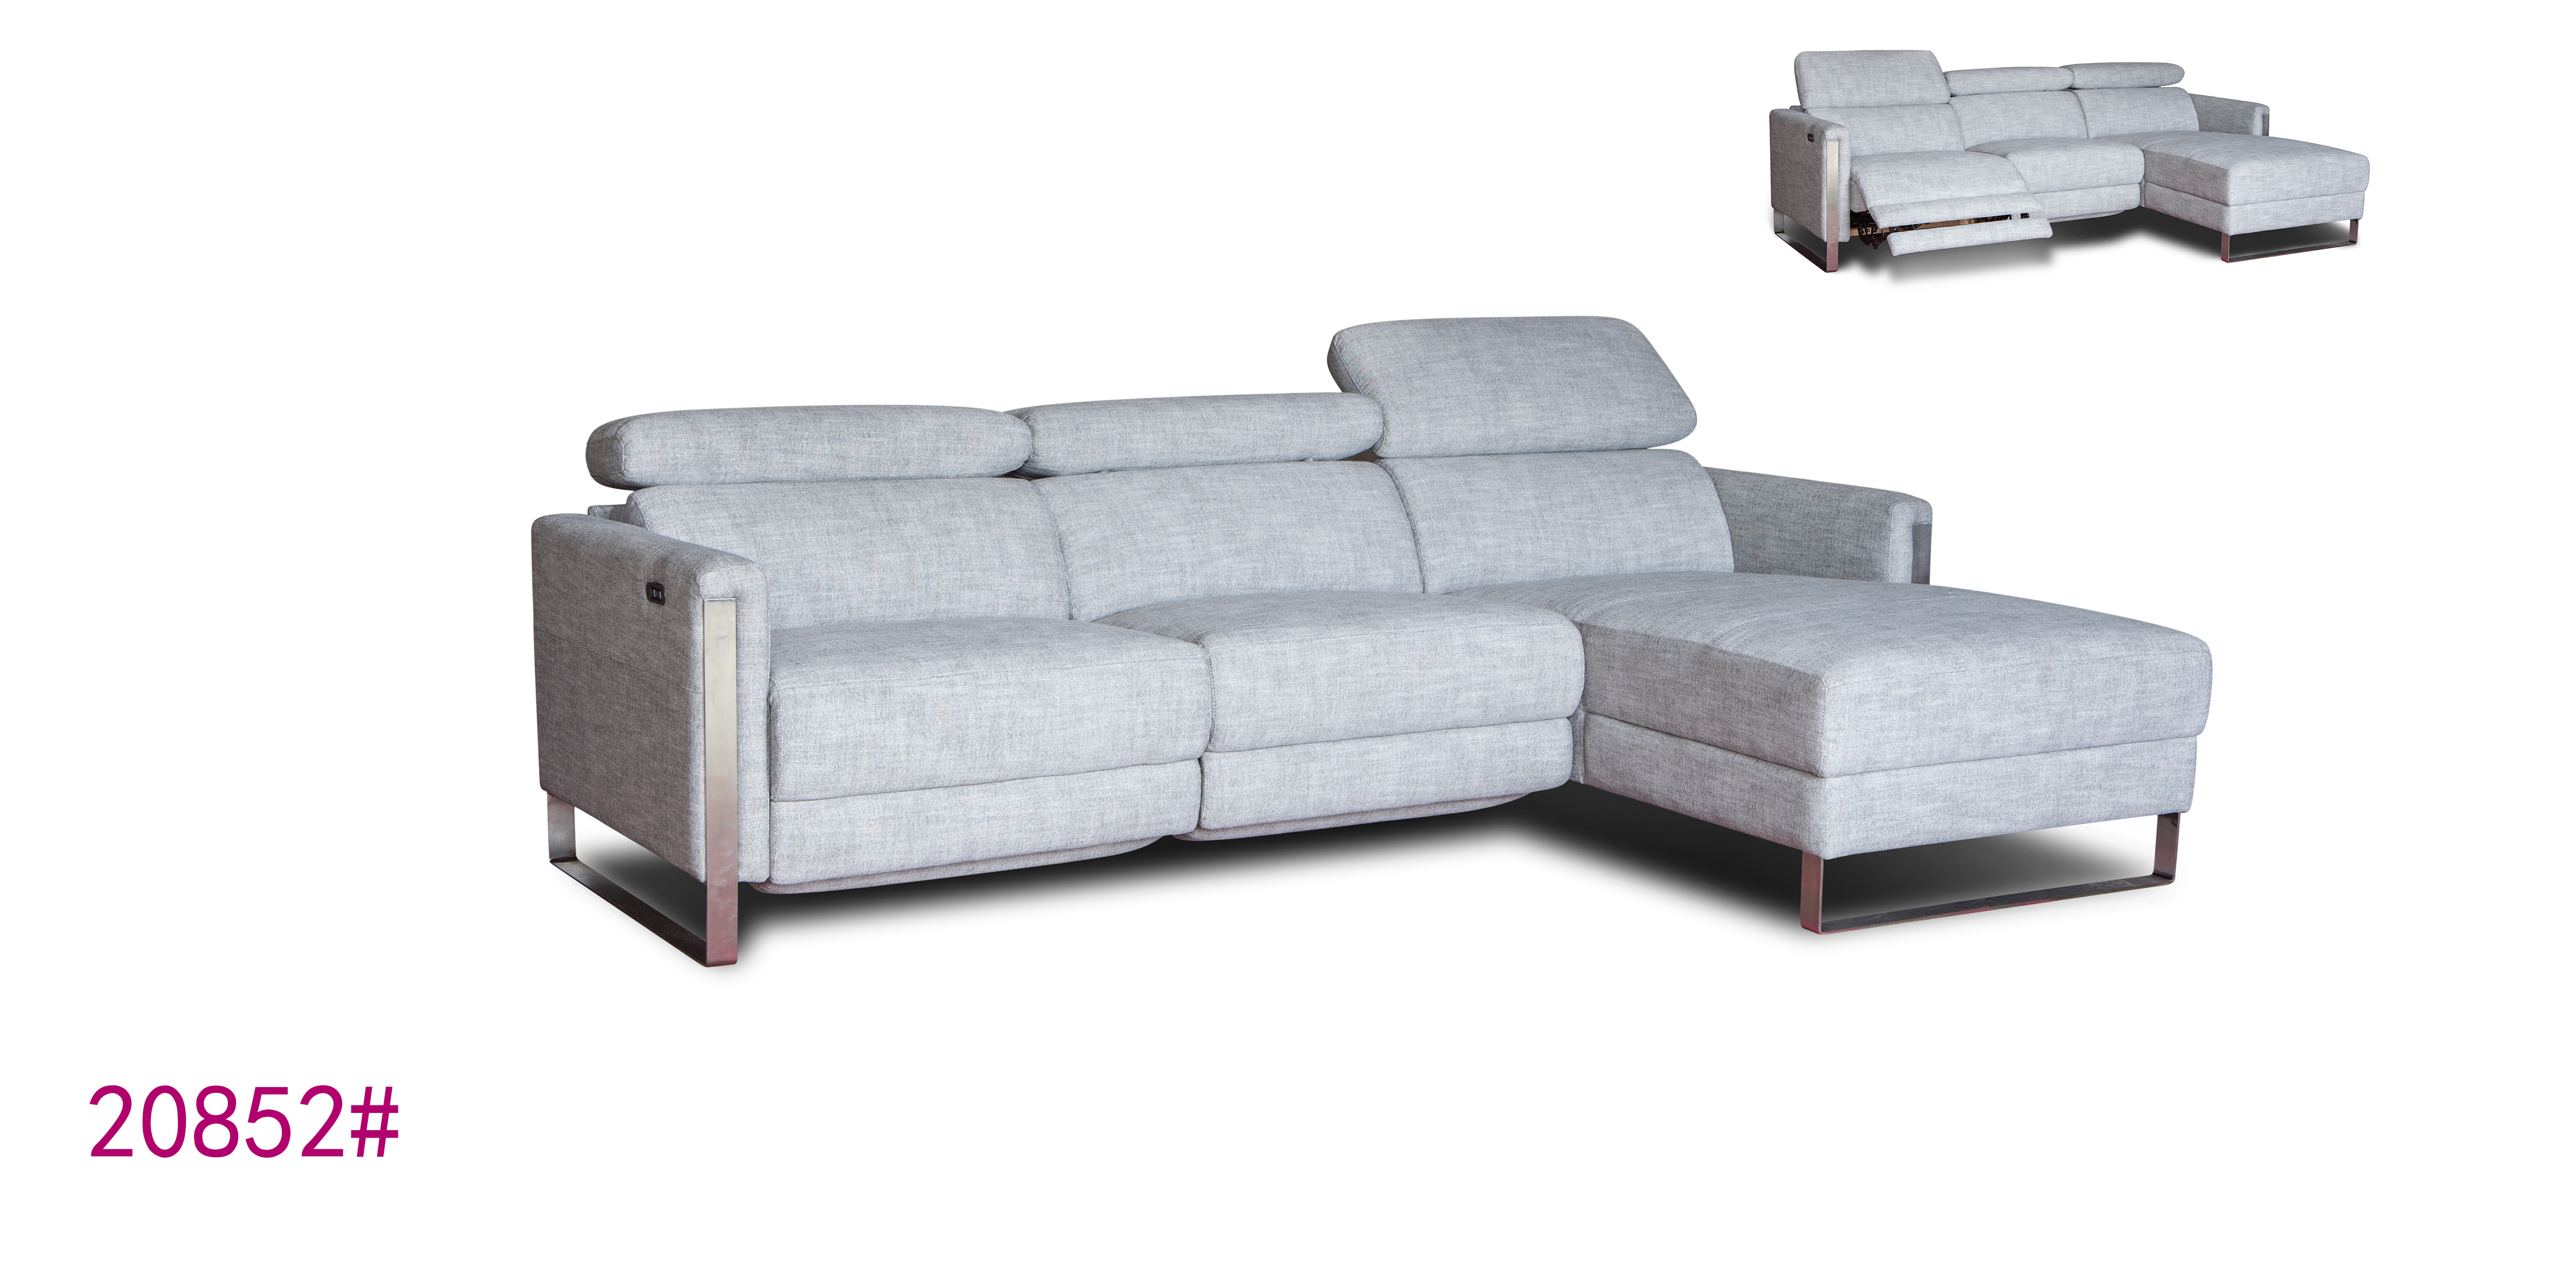 Nordic modern design grey fabric recliner sofa set